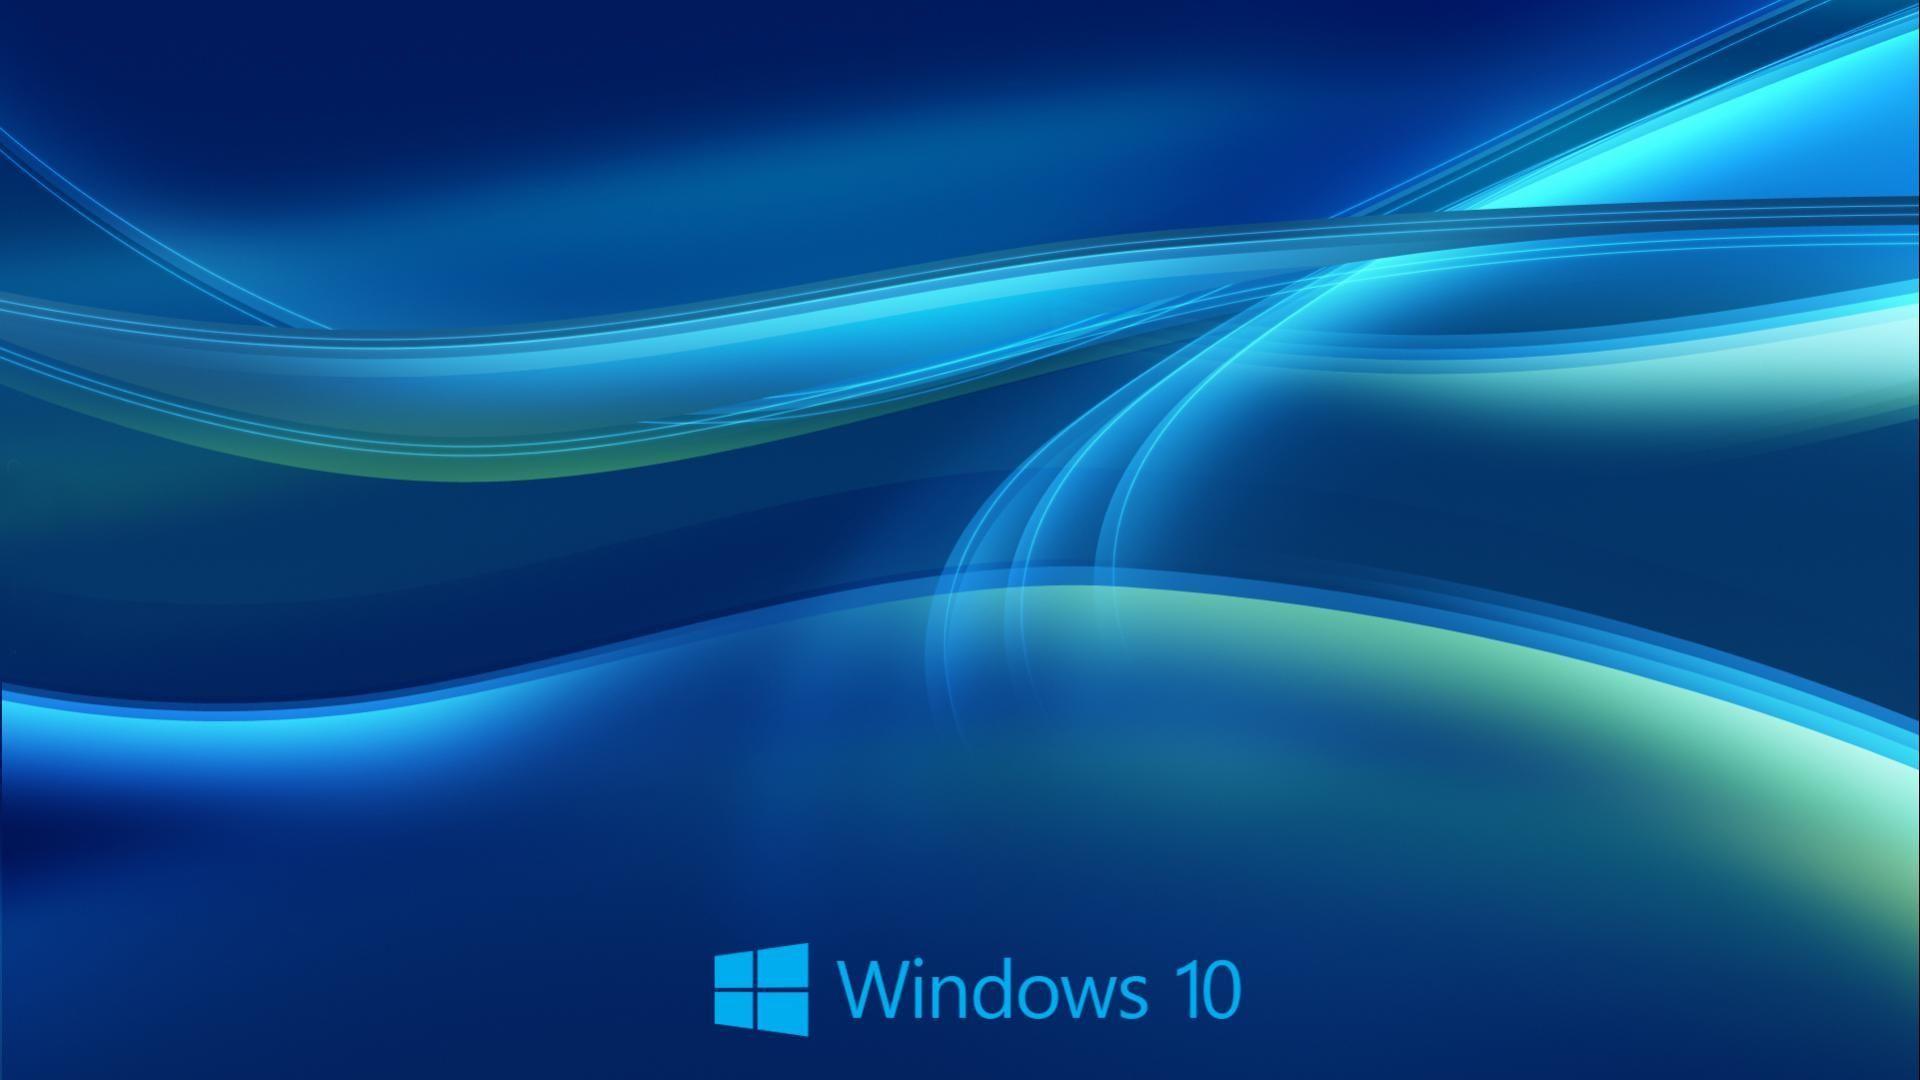 Windows 10 Logo Wallpaper 1920x1080 .com